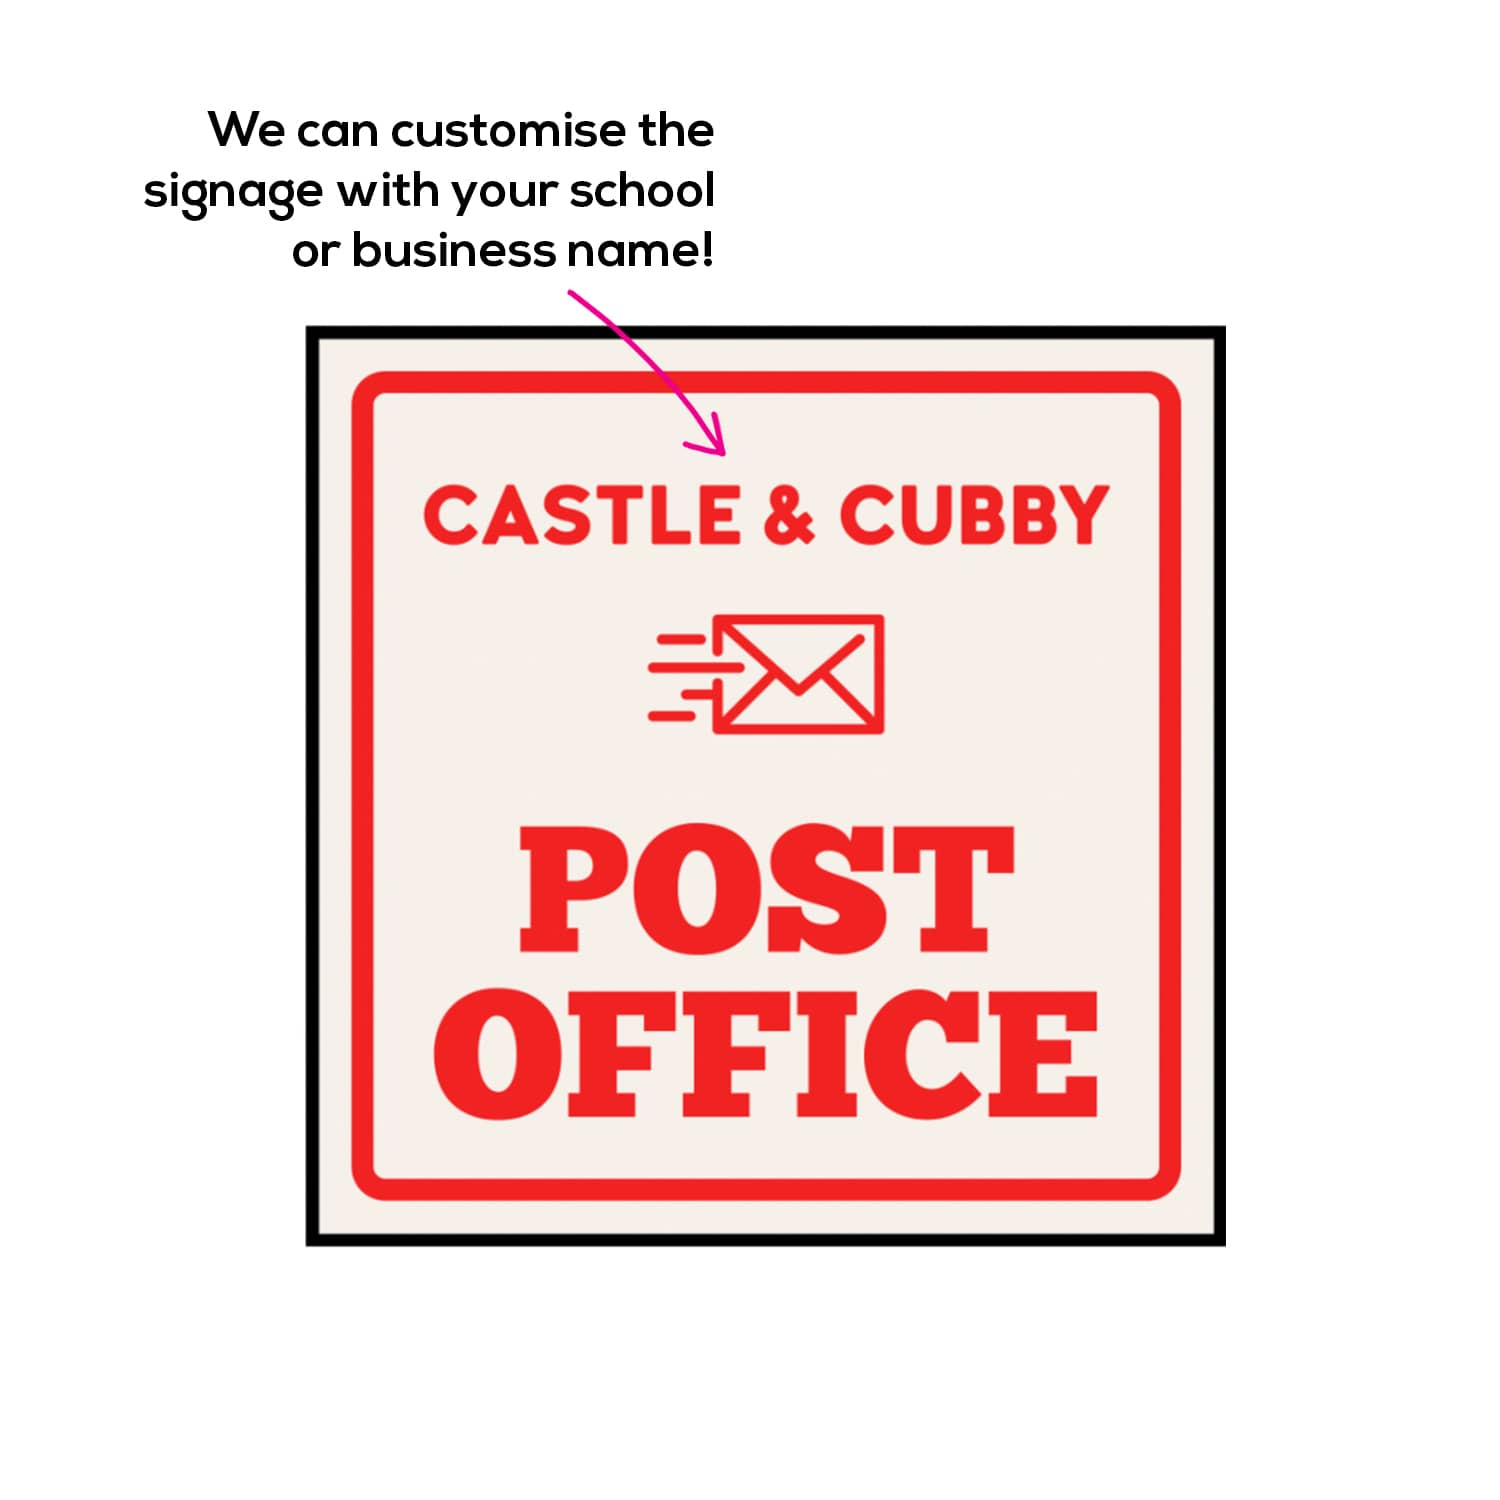 Post office sign artwork